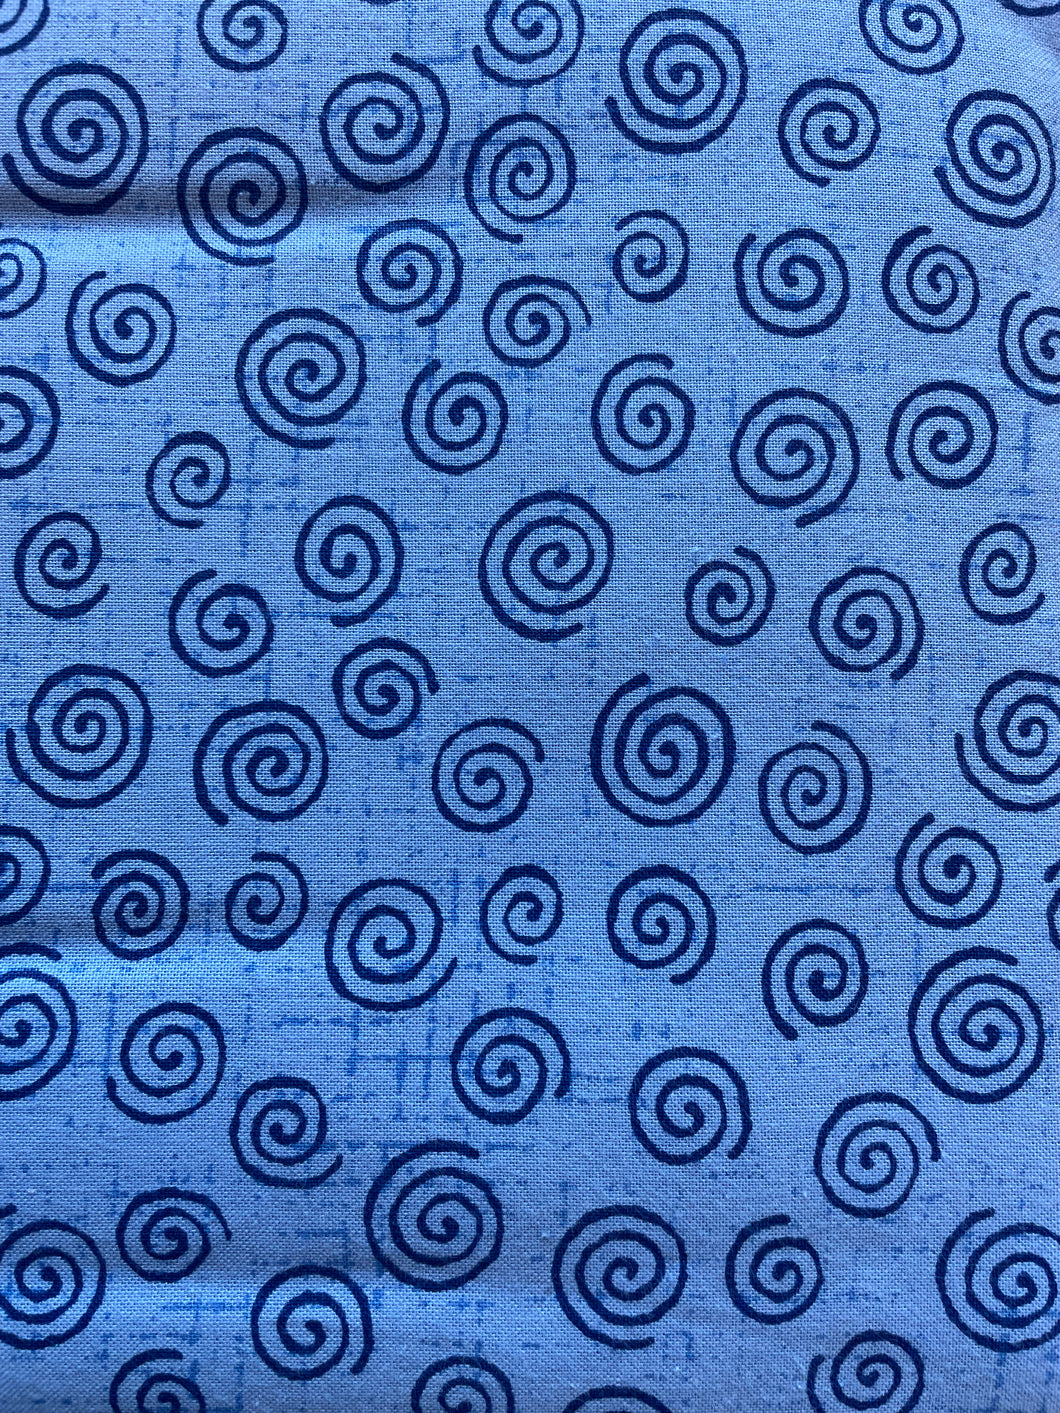 Light blue with dark blue swirls Wideback precut 108” by Westrade Fabrics